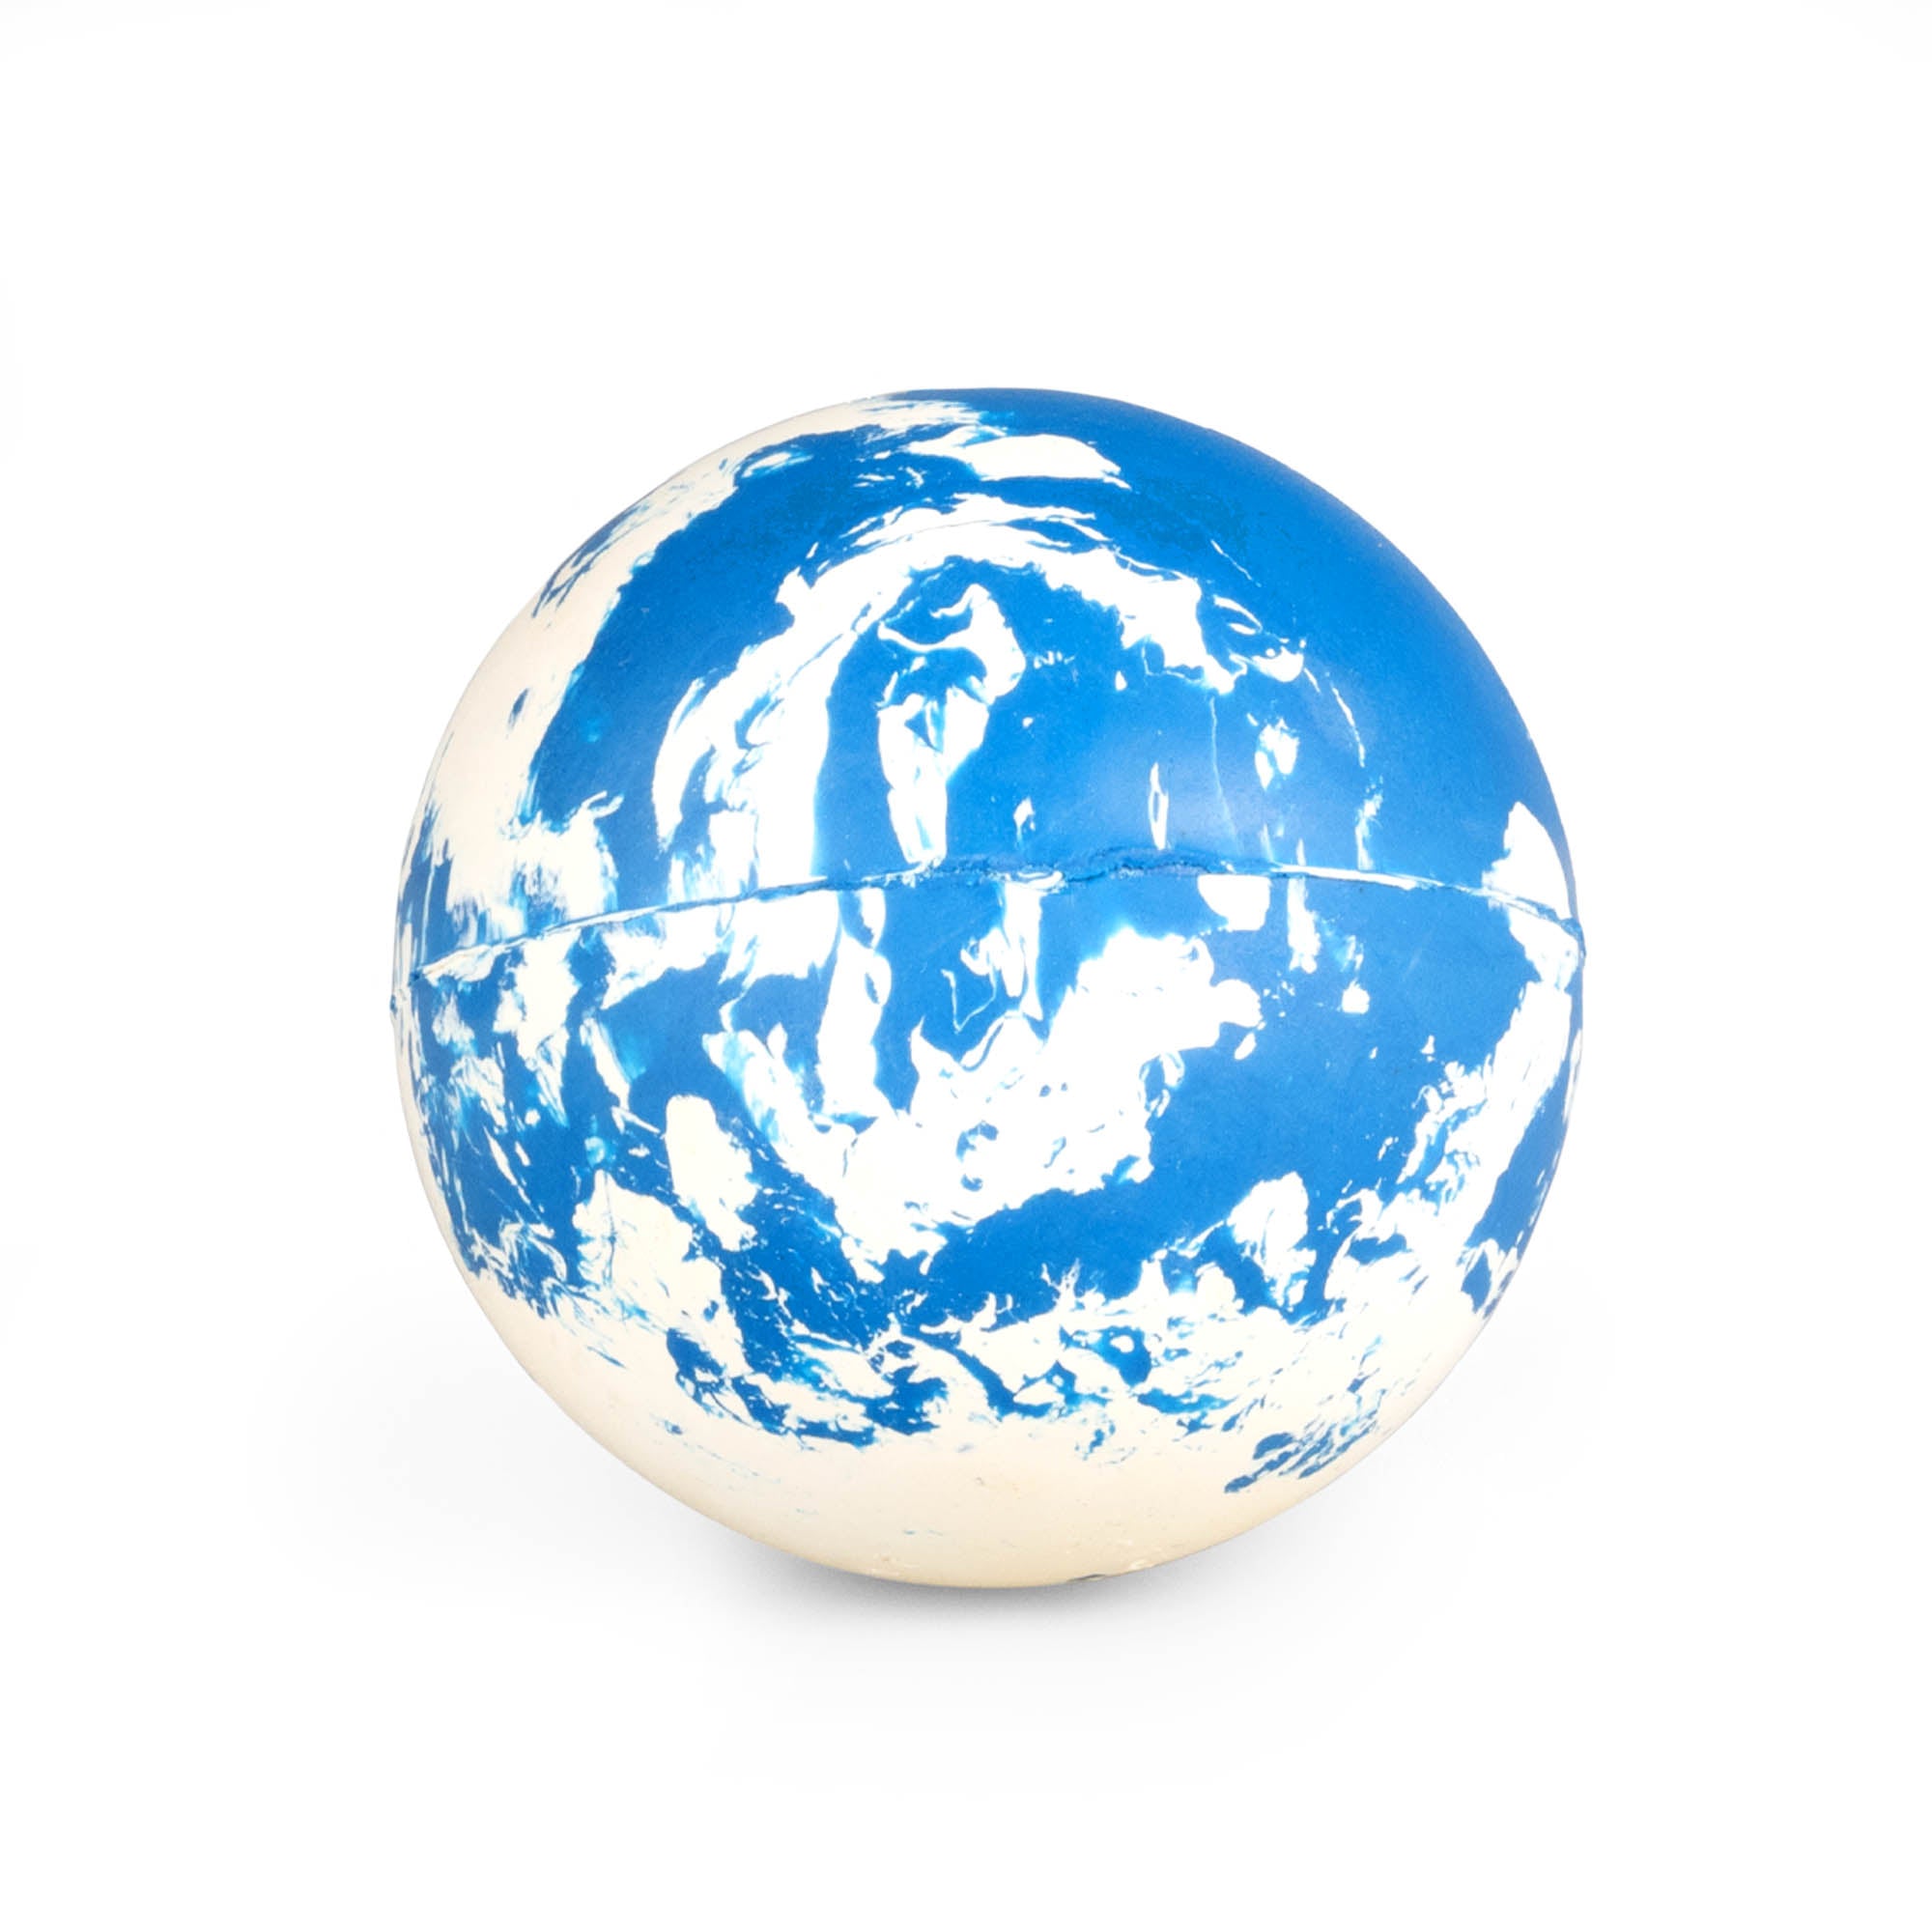 Single blue oddballs bounce ball